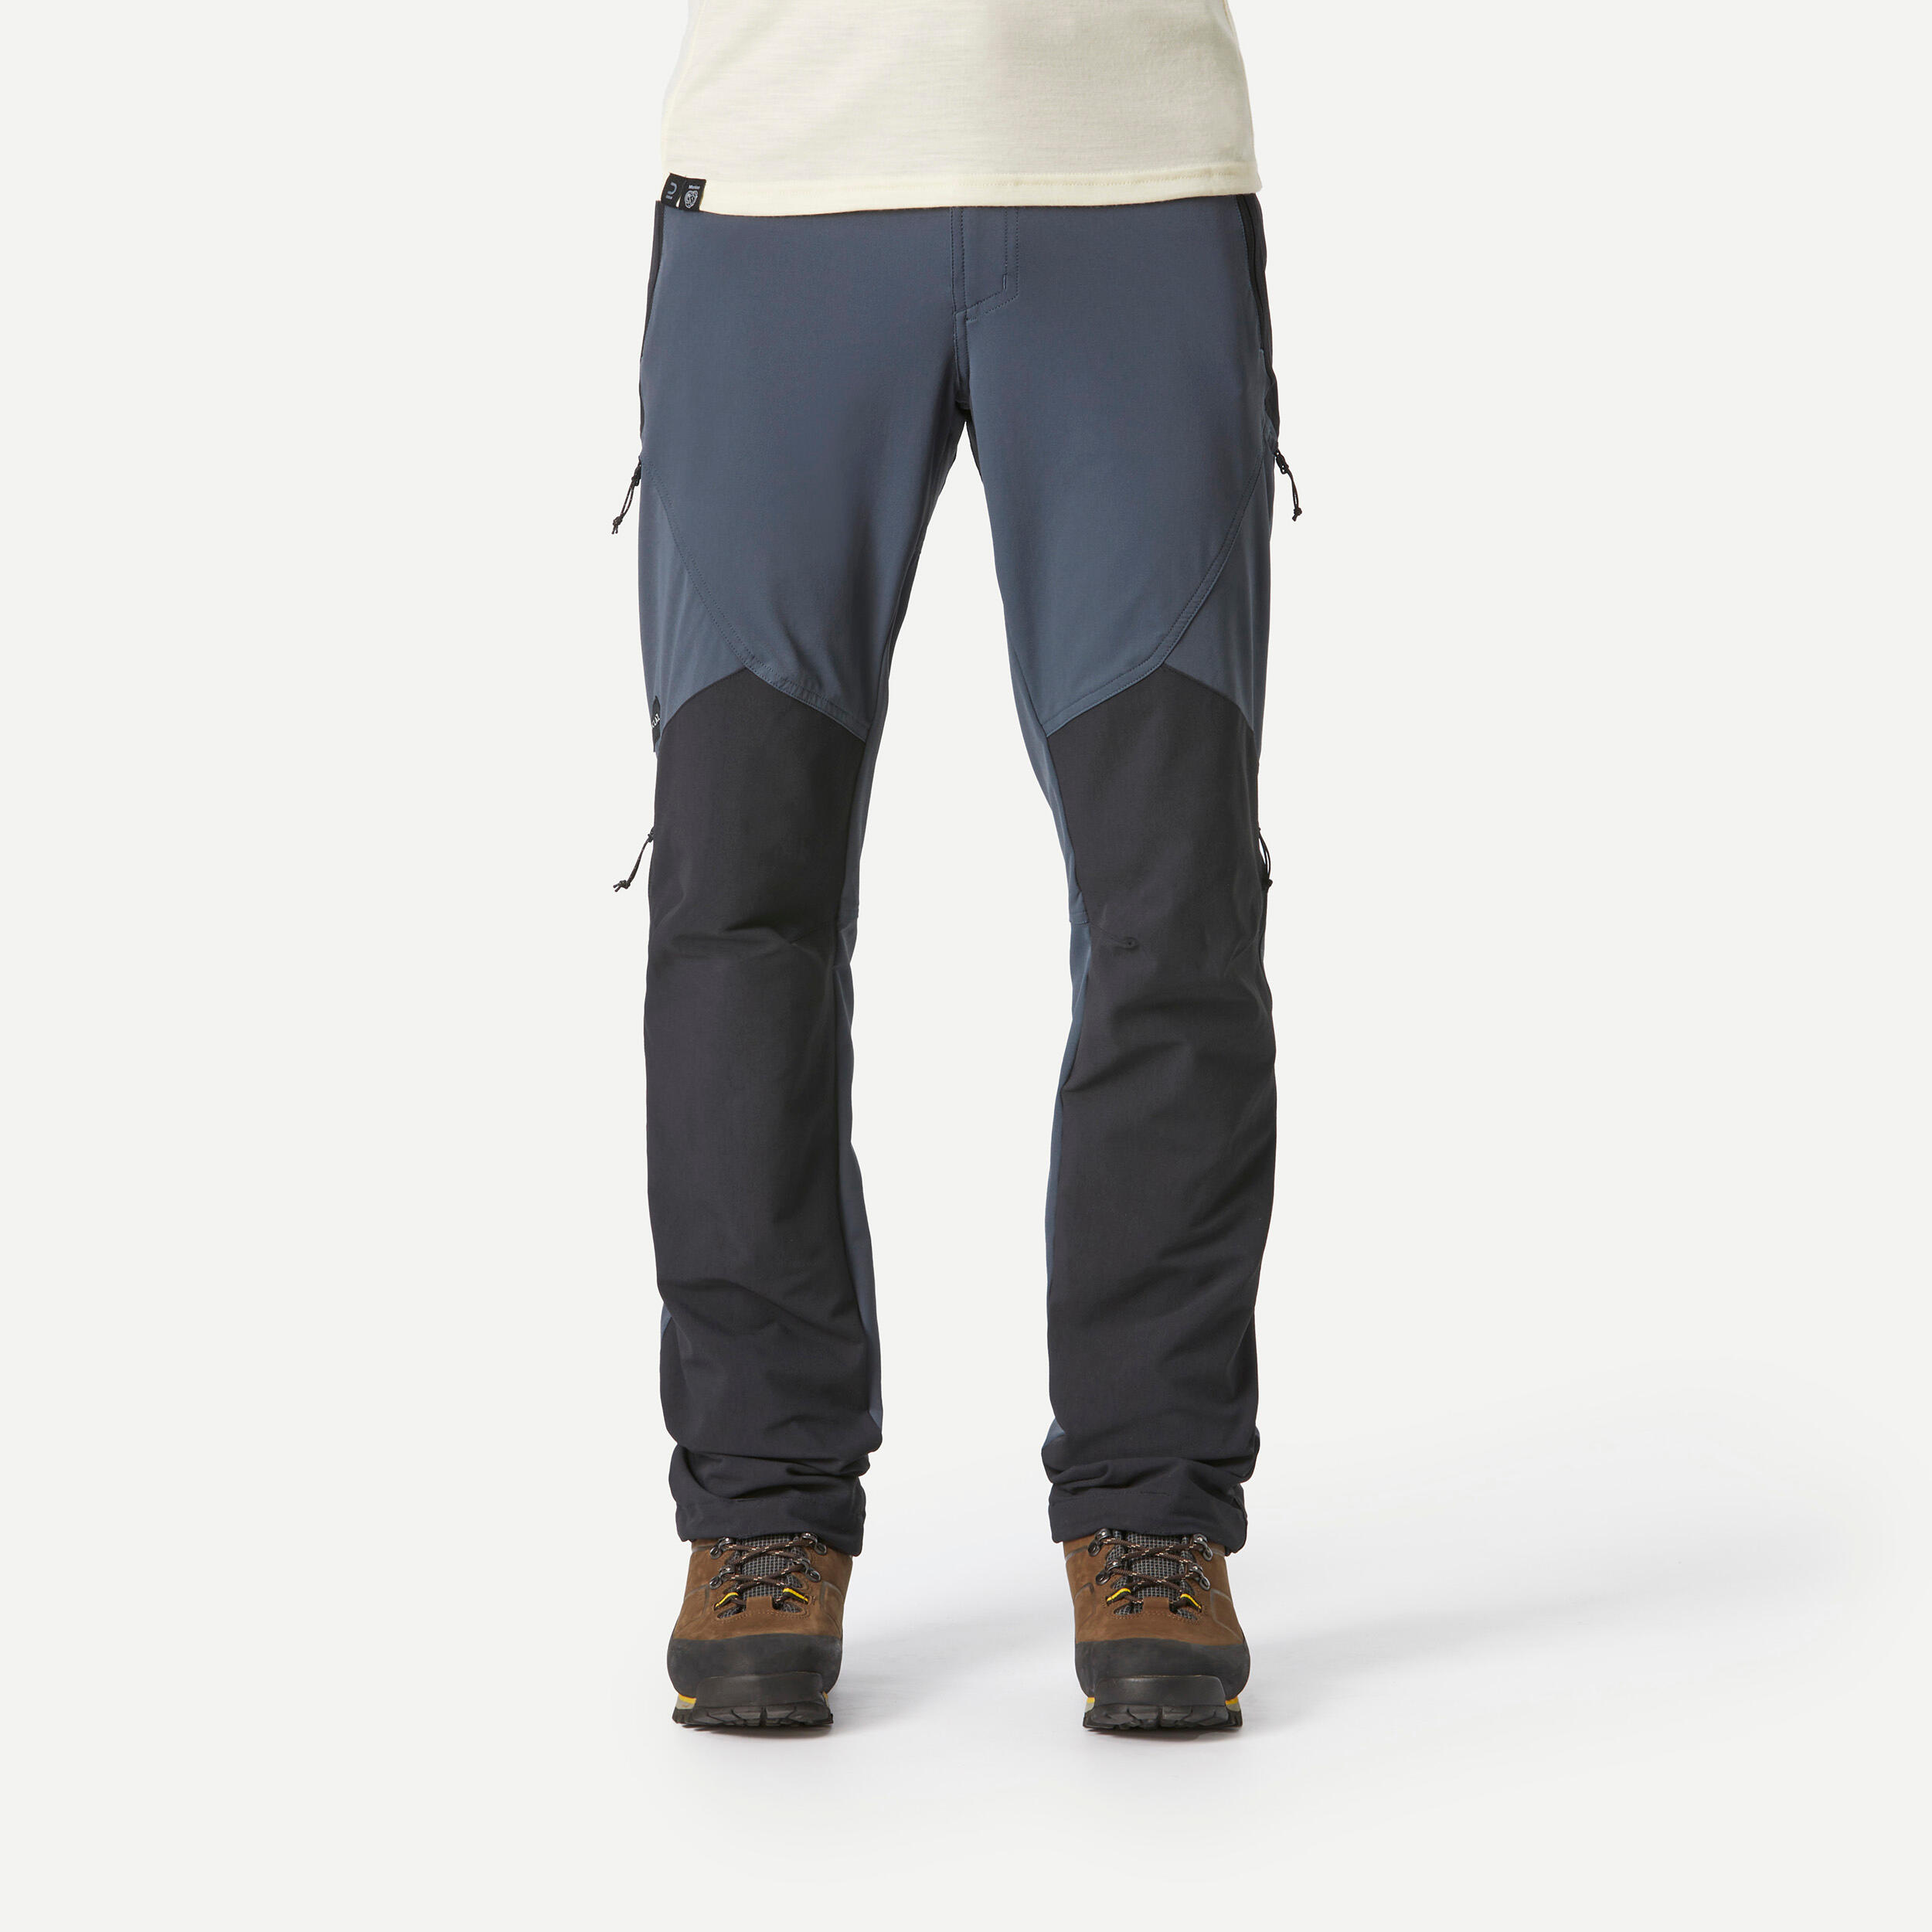 Men’s 2-in-1 Hiking Pants - MT 100 Grey